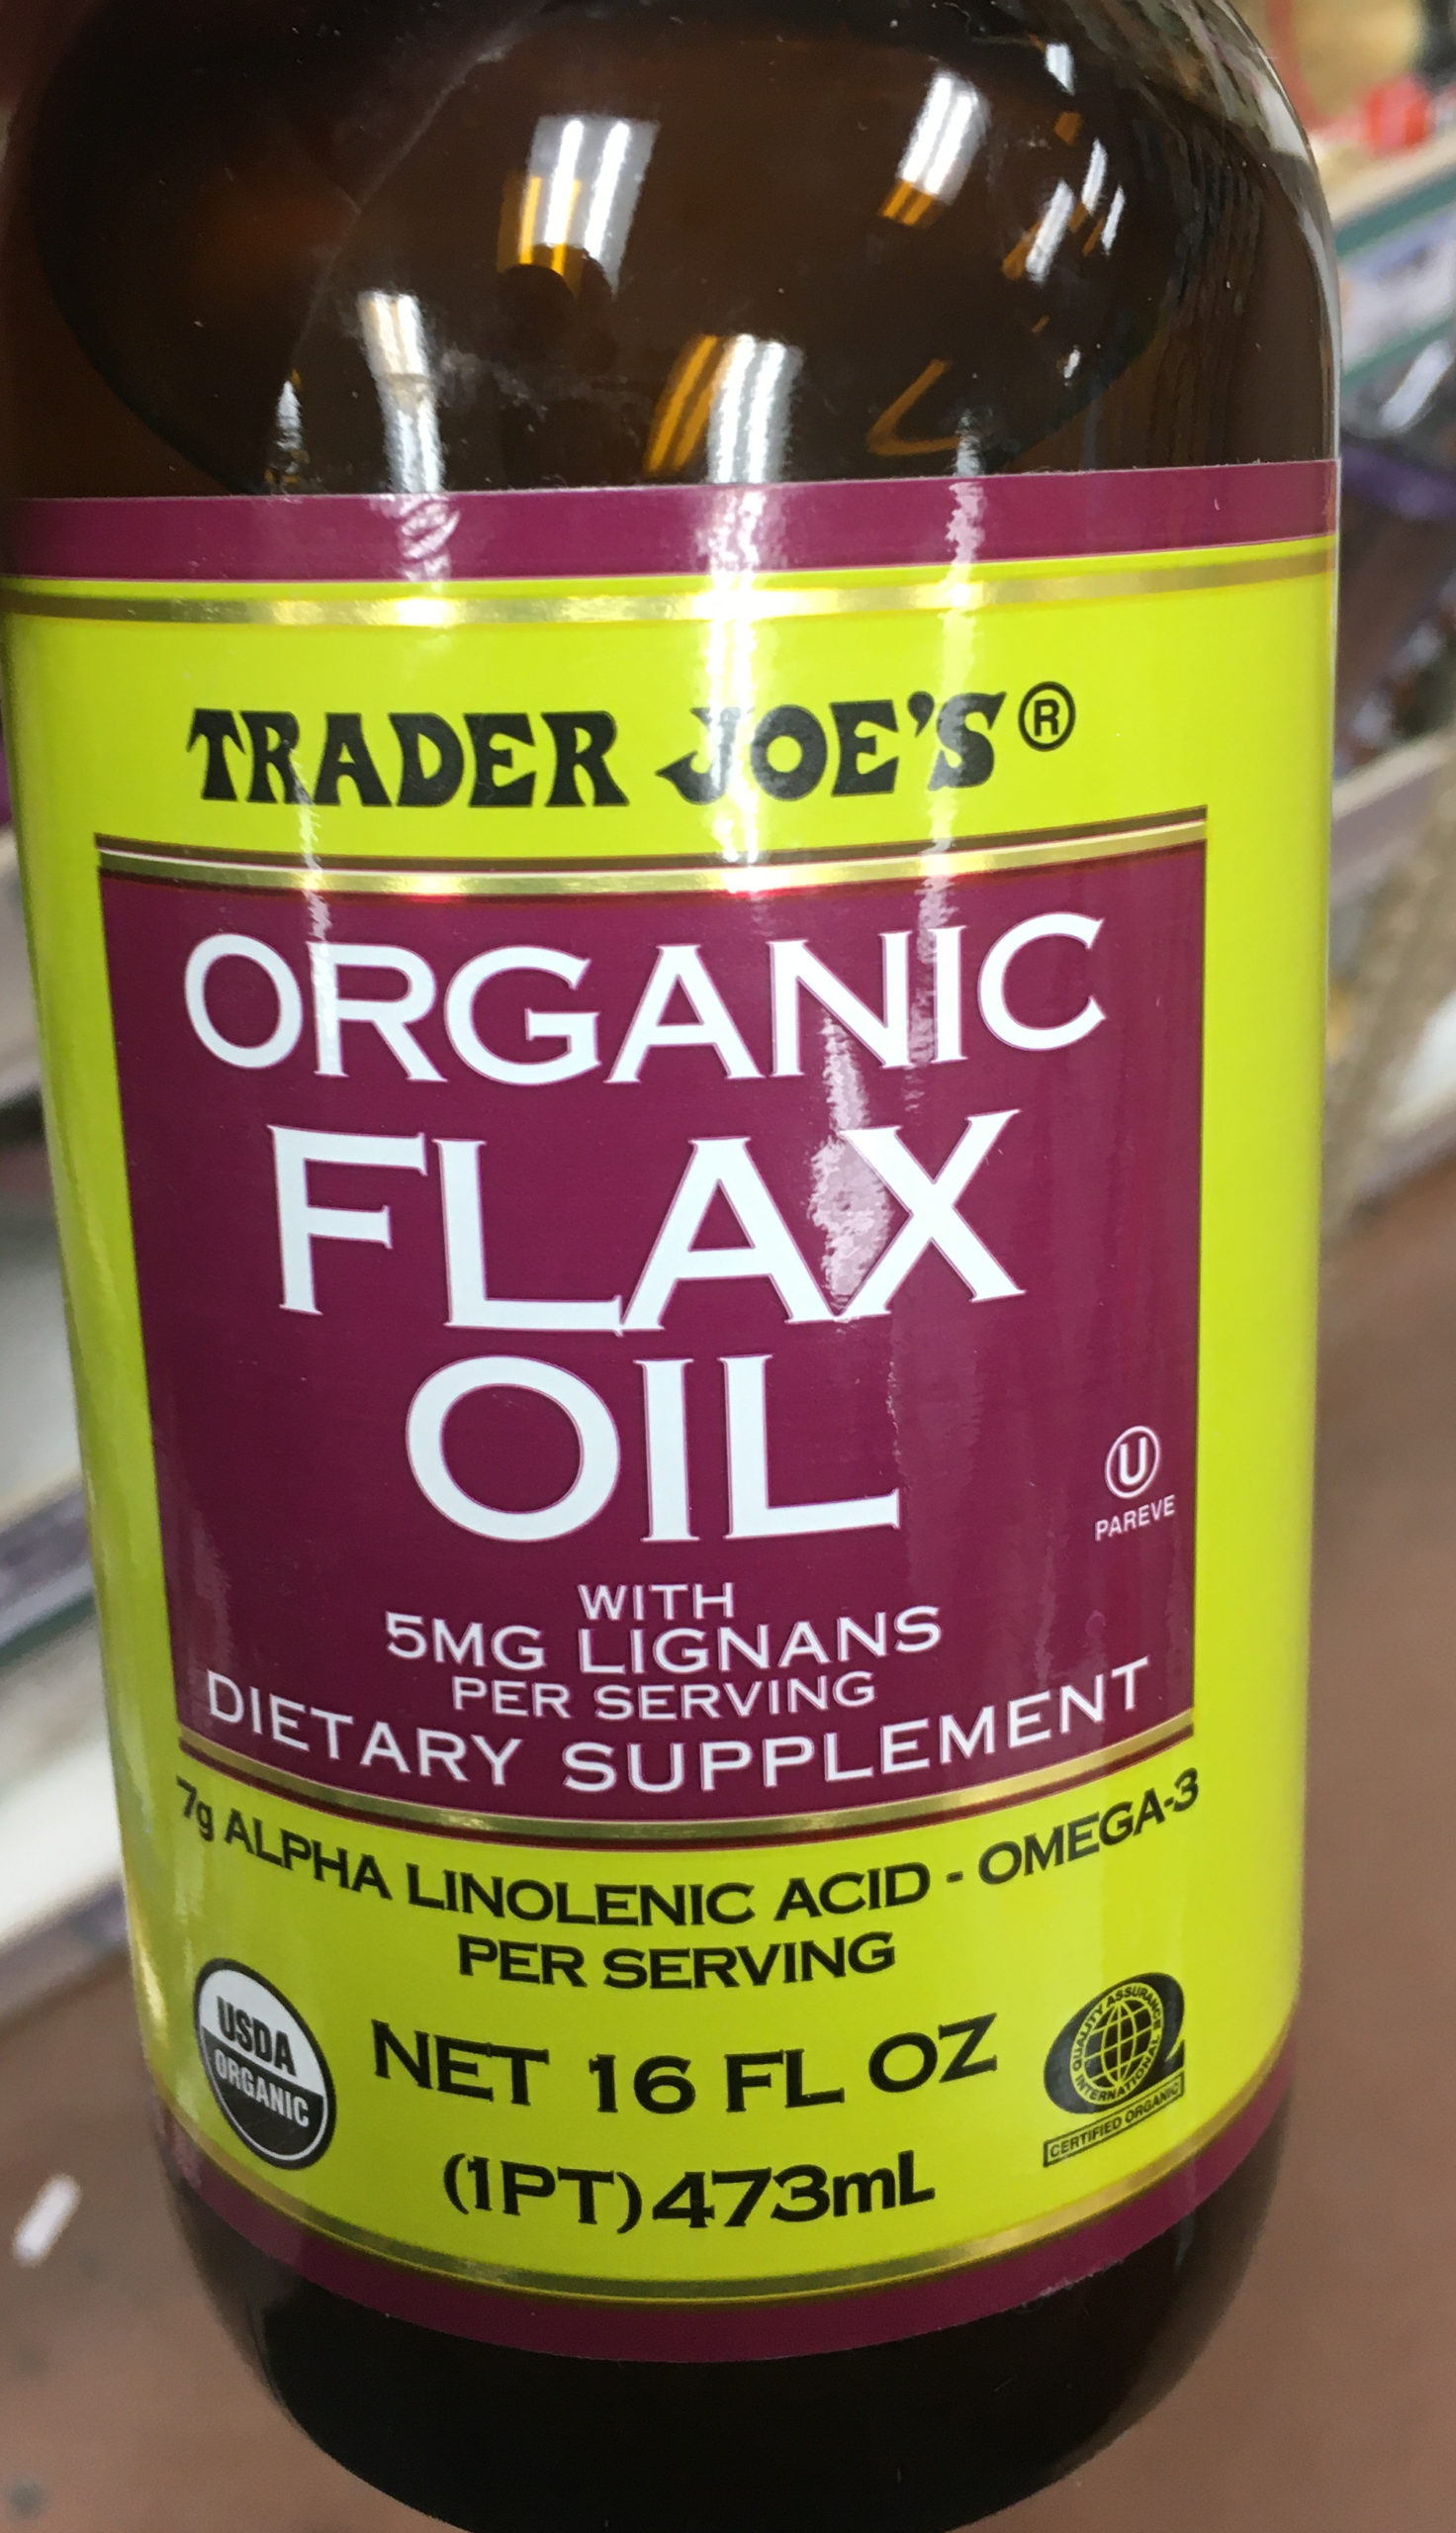 Trader Joe's Flaxseed Oil, Dietary Supplement - Trader Joe's Reviews